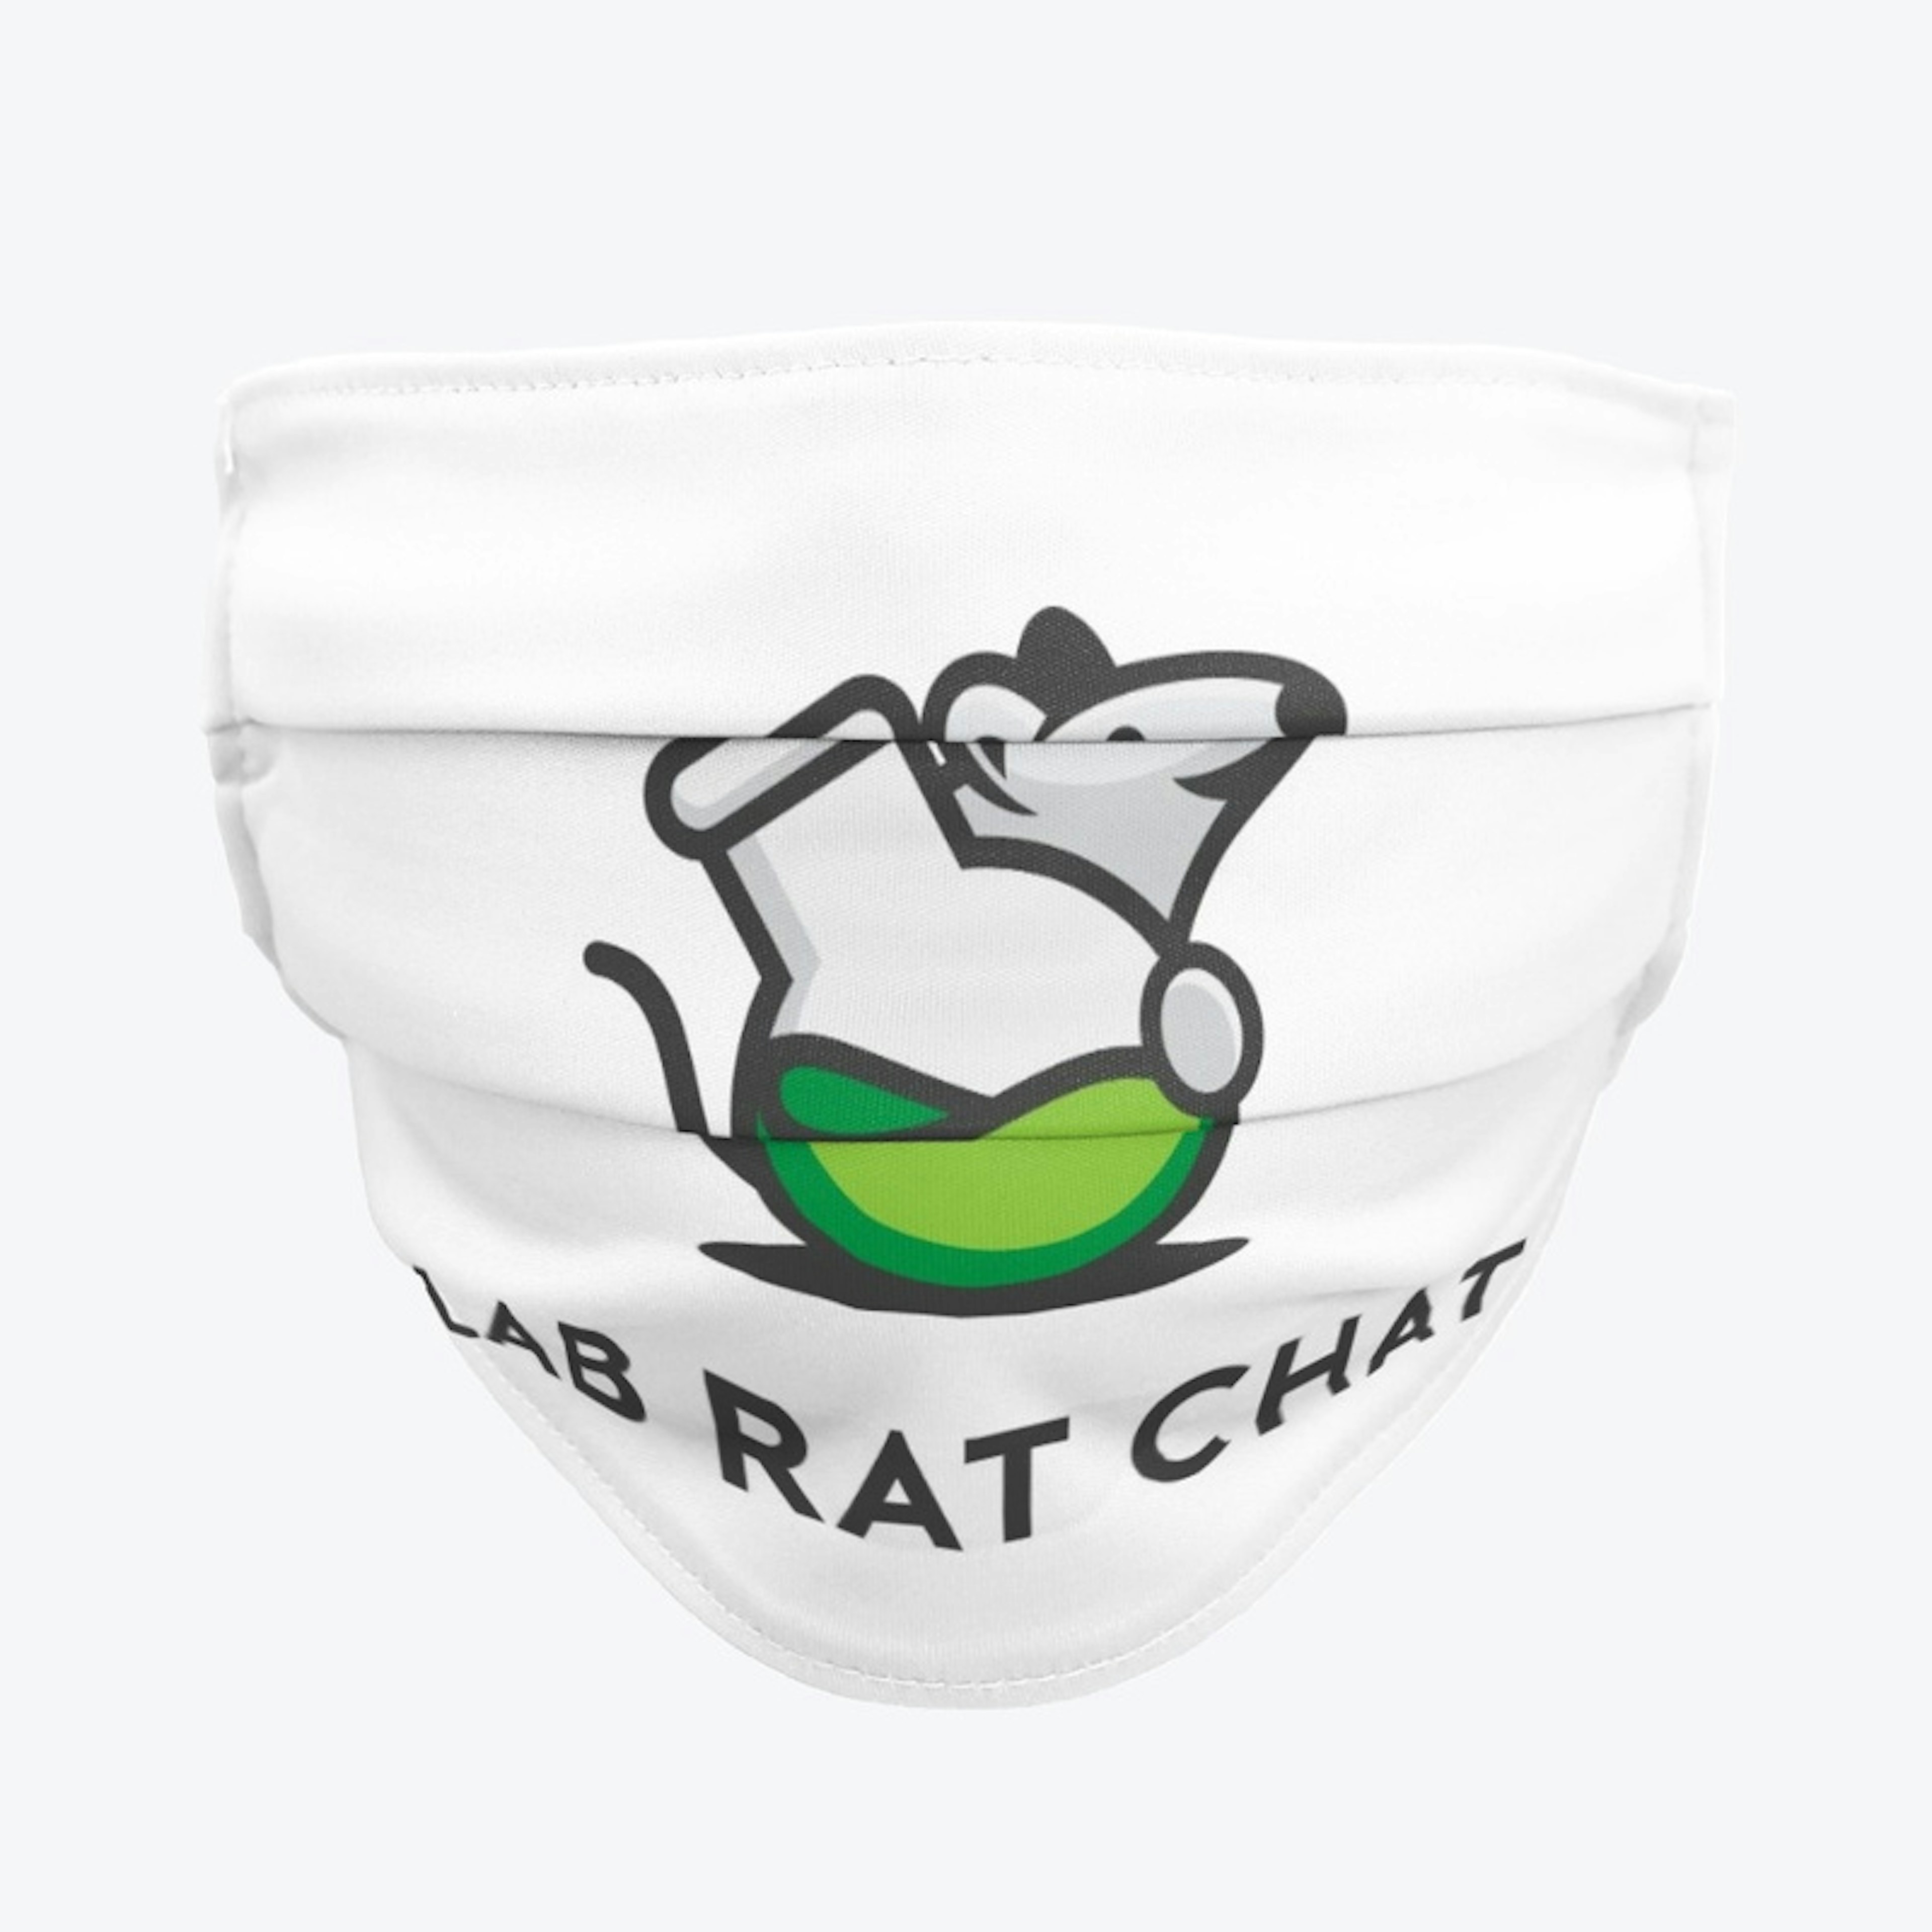 Lab Rat Chat Logo